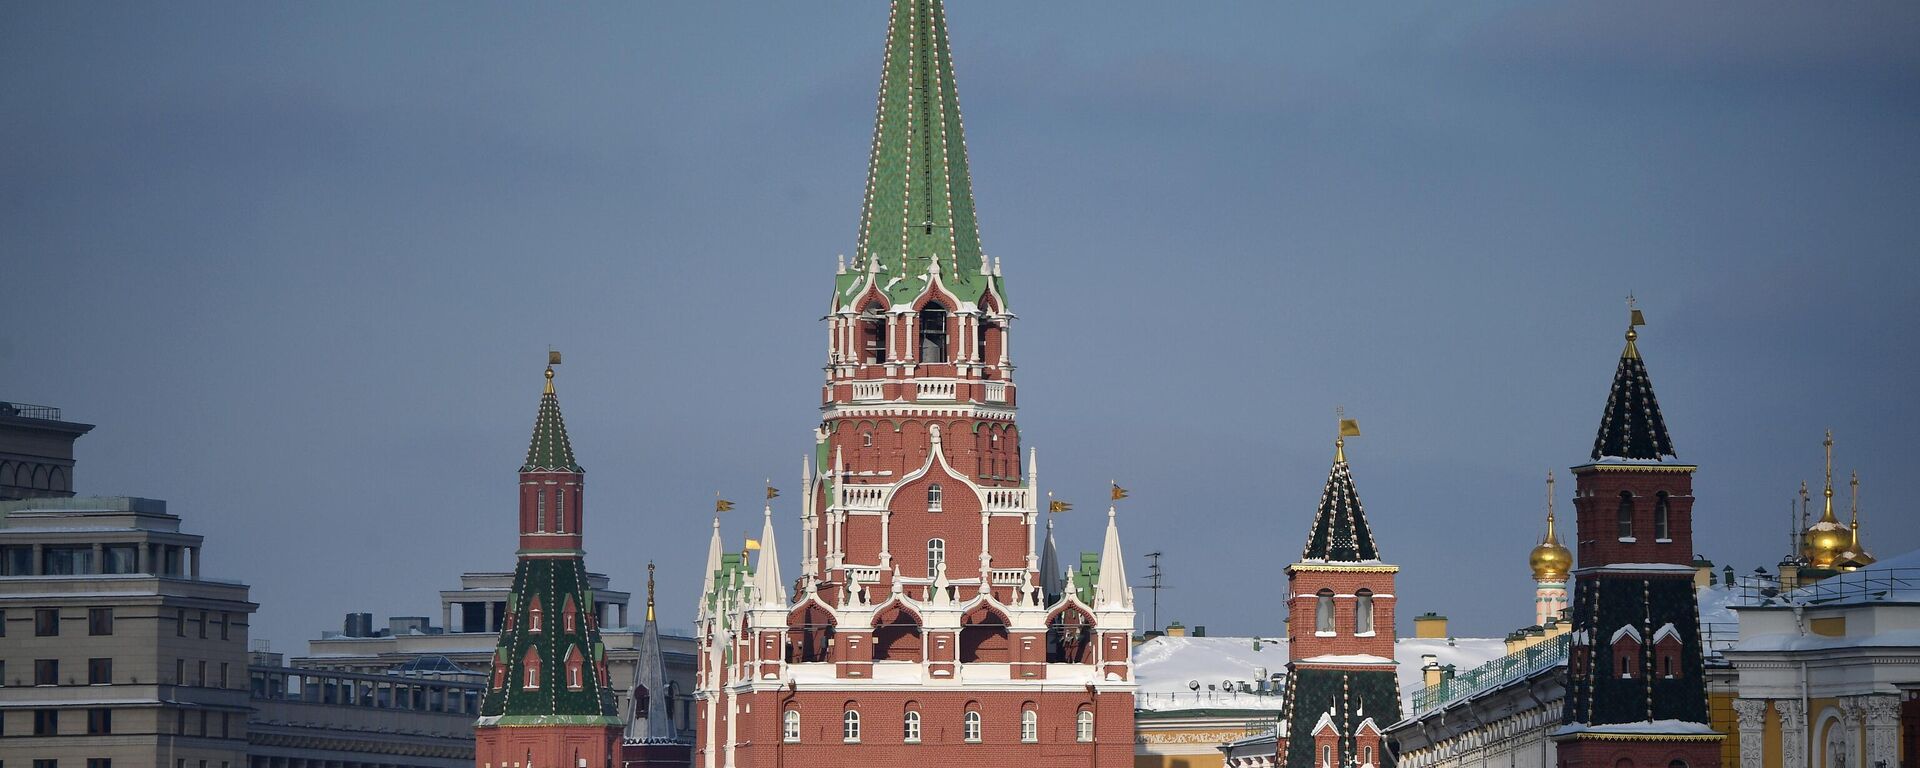 El Kremlin de Moscú, Rusia - Sputnik Mundo, 1920, 22.11.2021